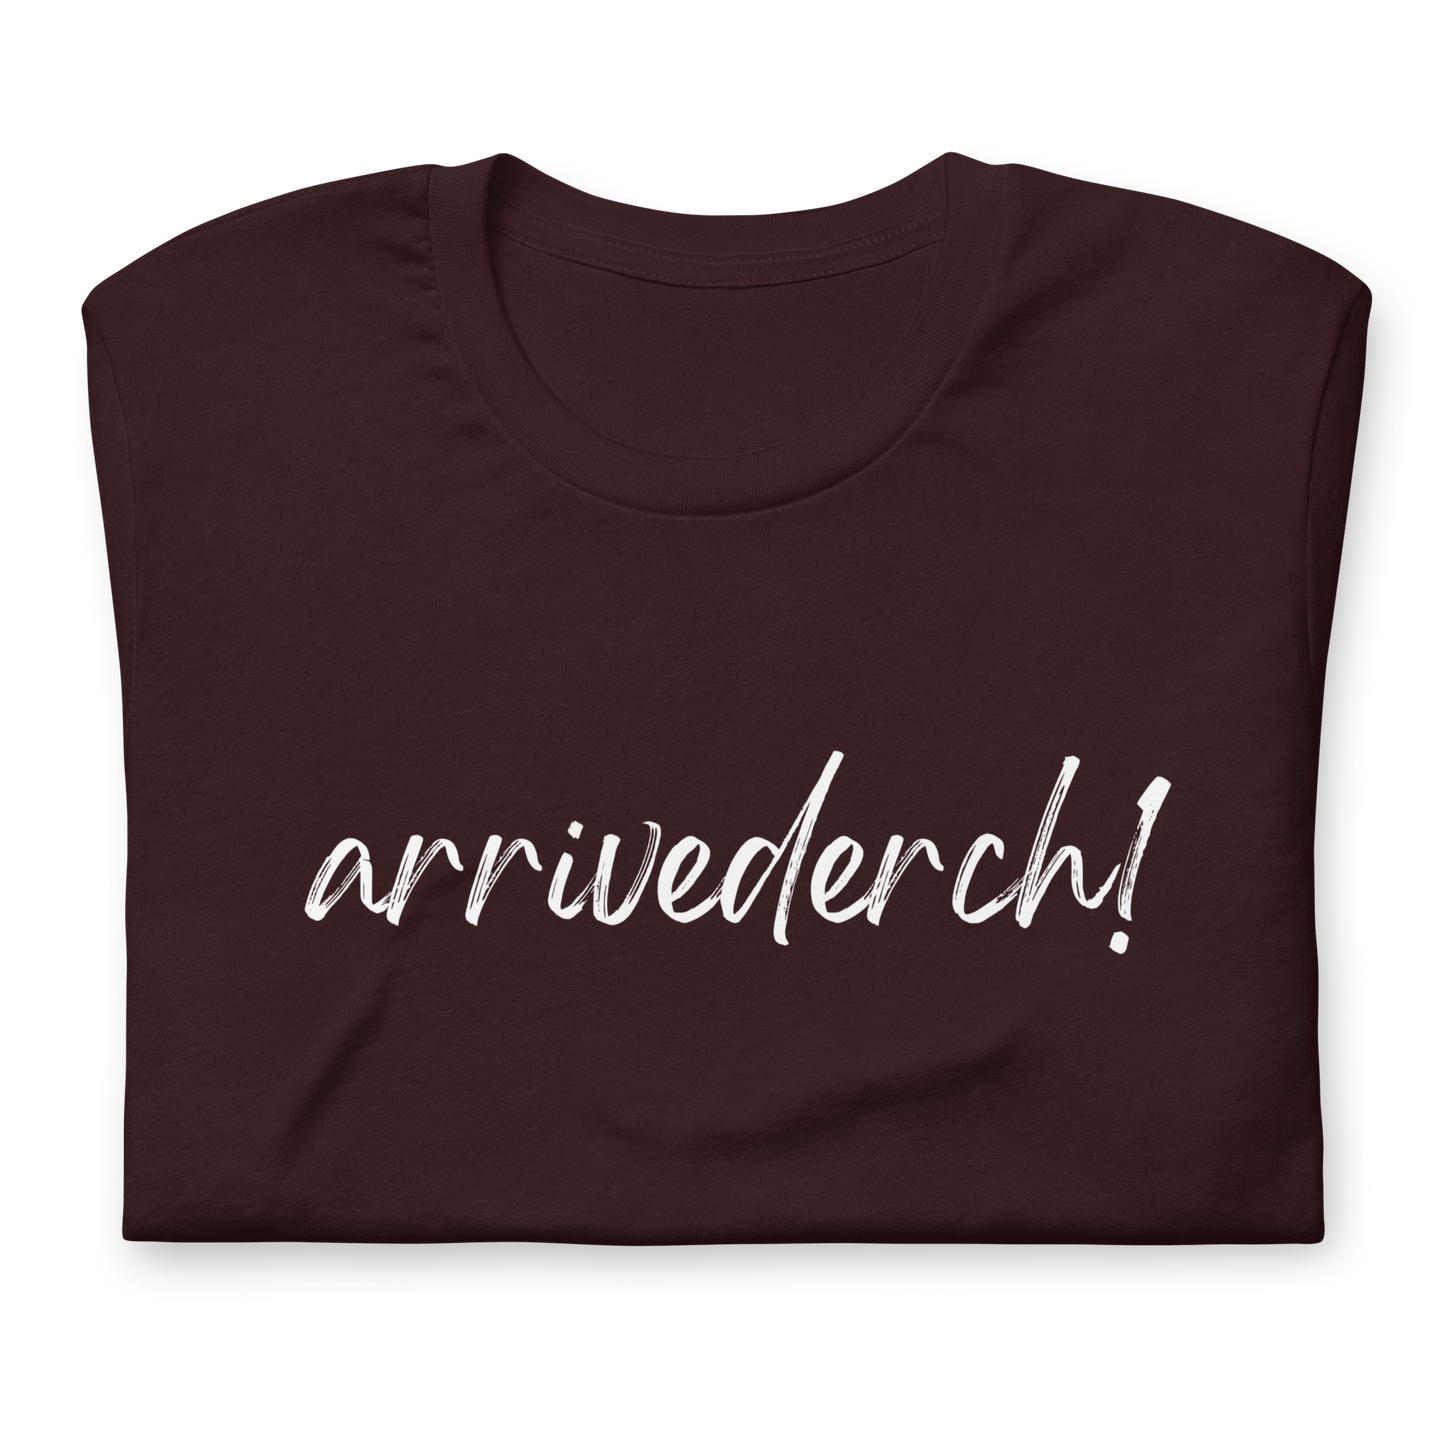 Arrivederch! Unisex t-shirt